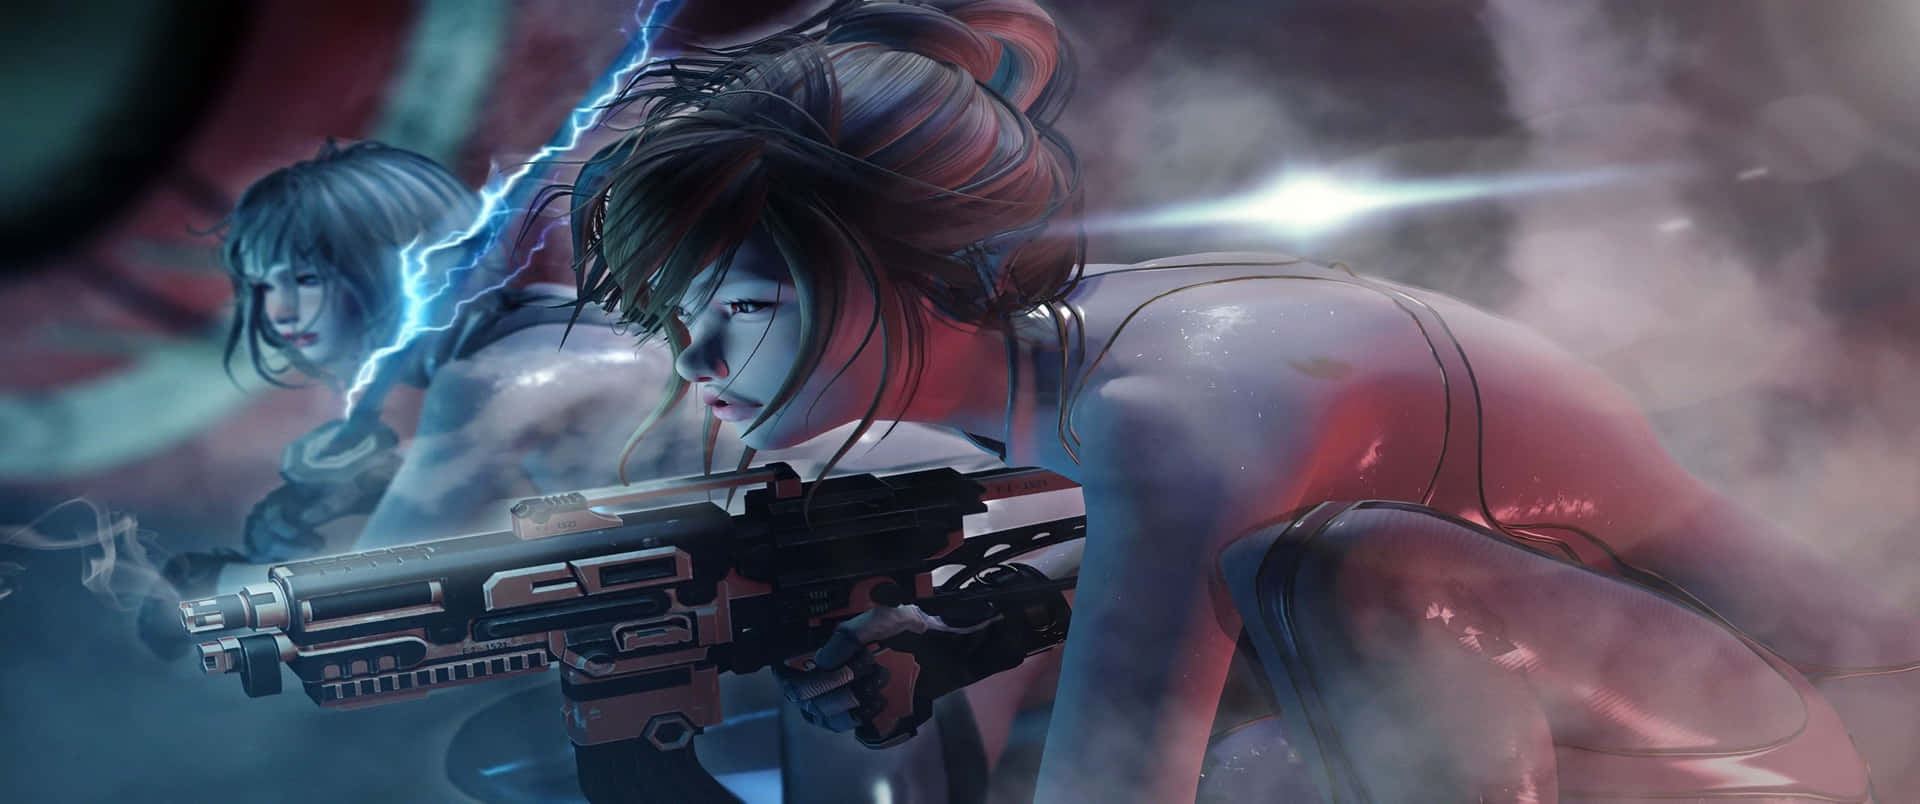 3440x1440p Cyberpunk 2077 Background Girls Holding Futuristic Weapons Background